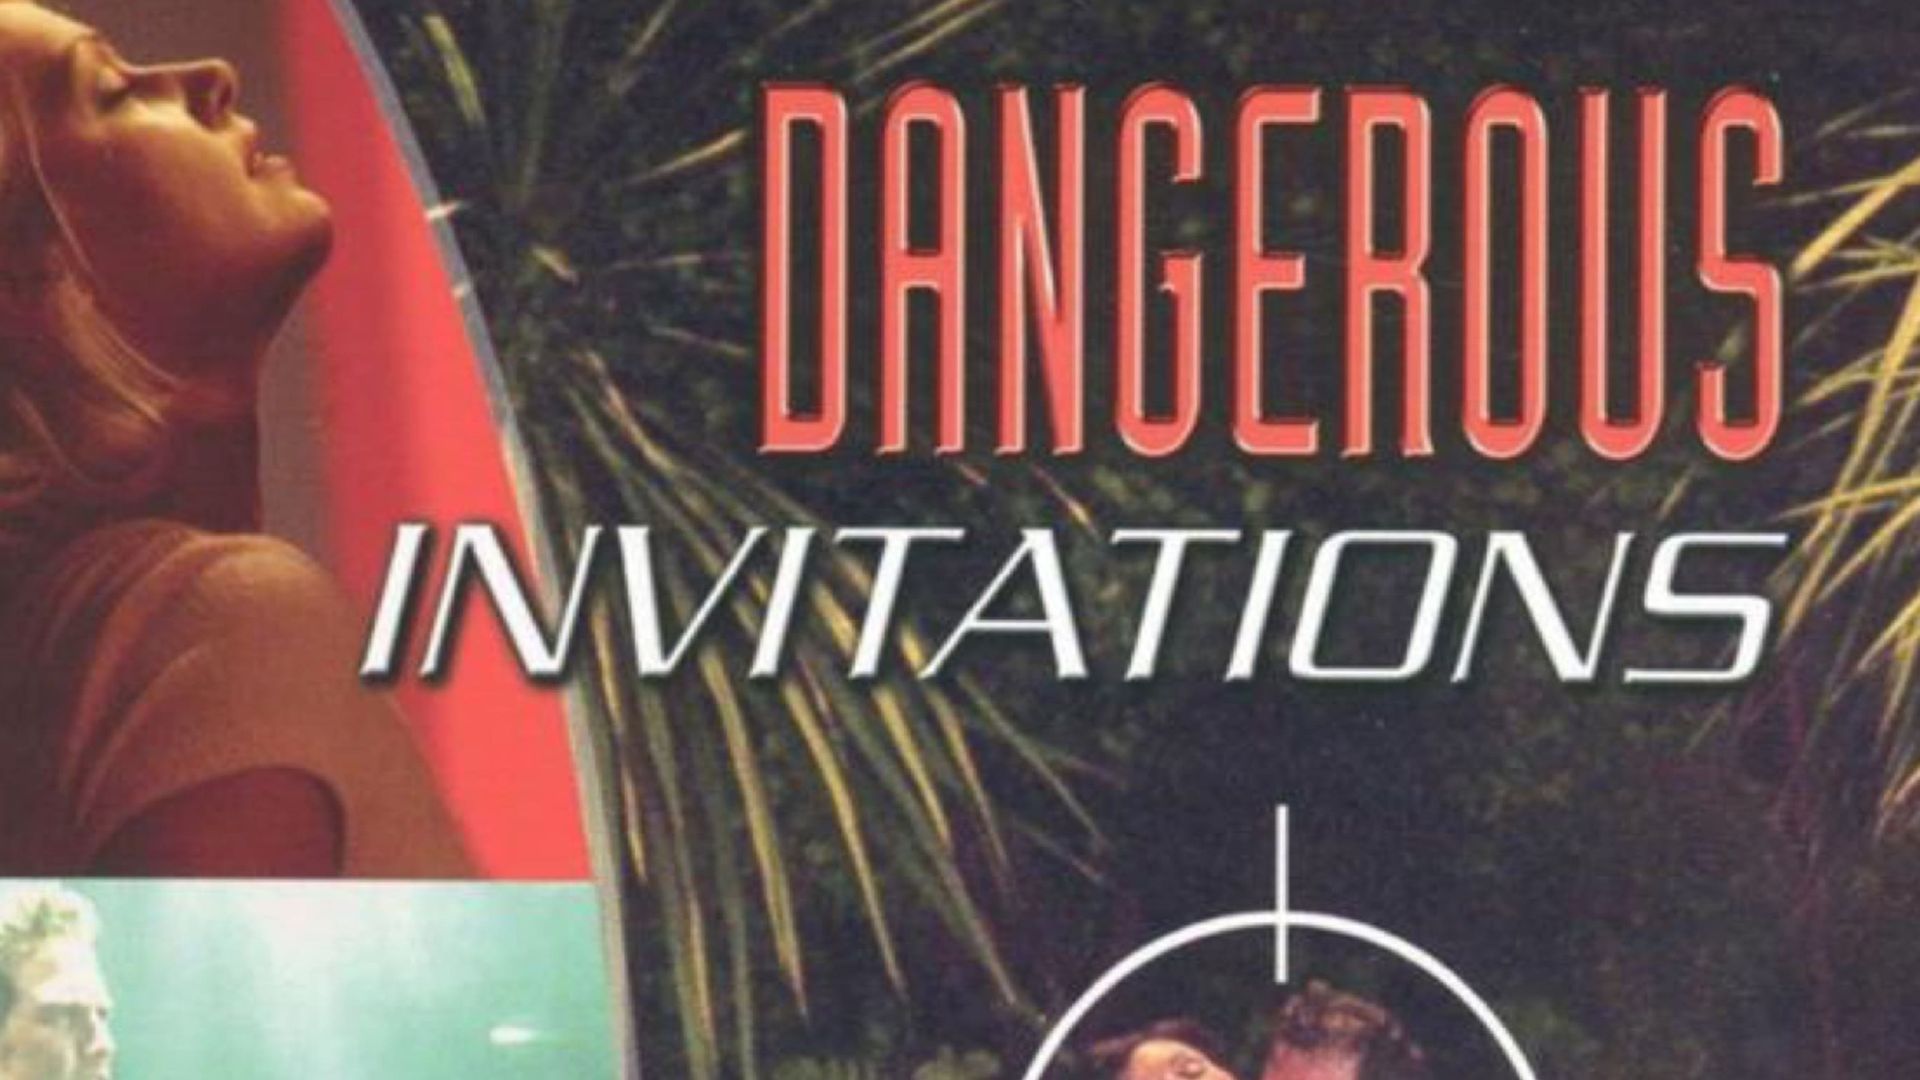 Dangerous Invitations background